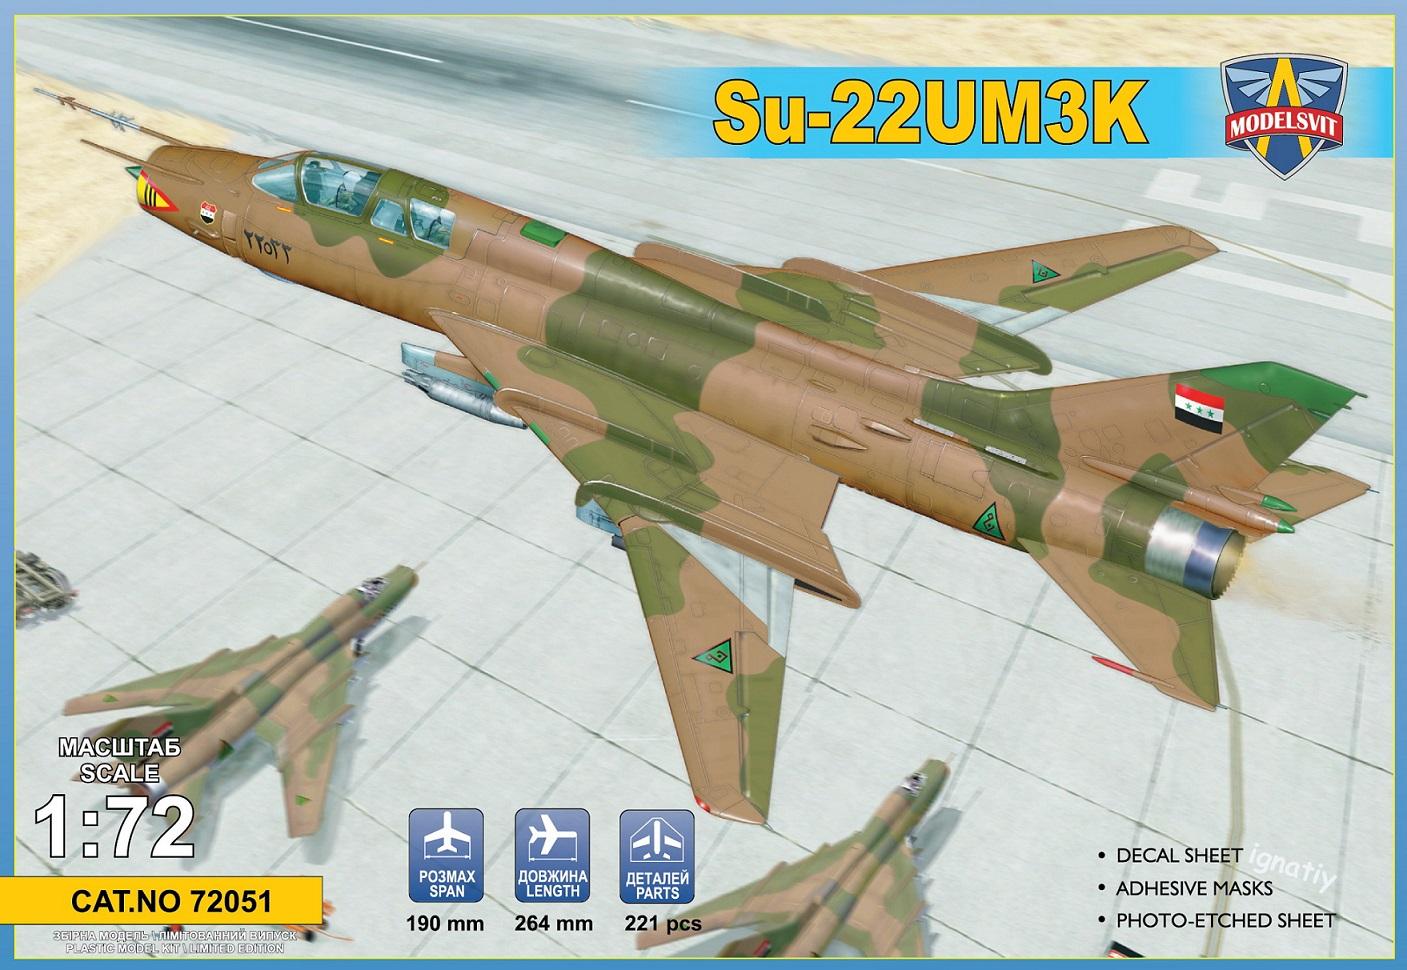 72051_Su-22UM3K

72 10000ft